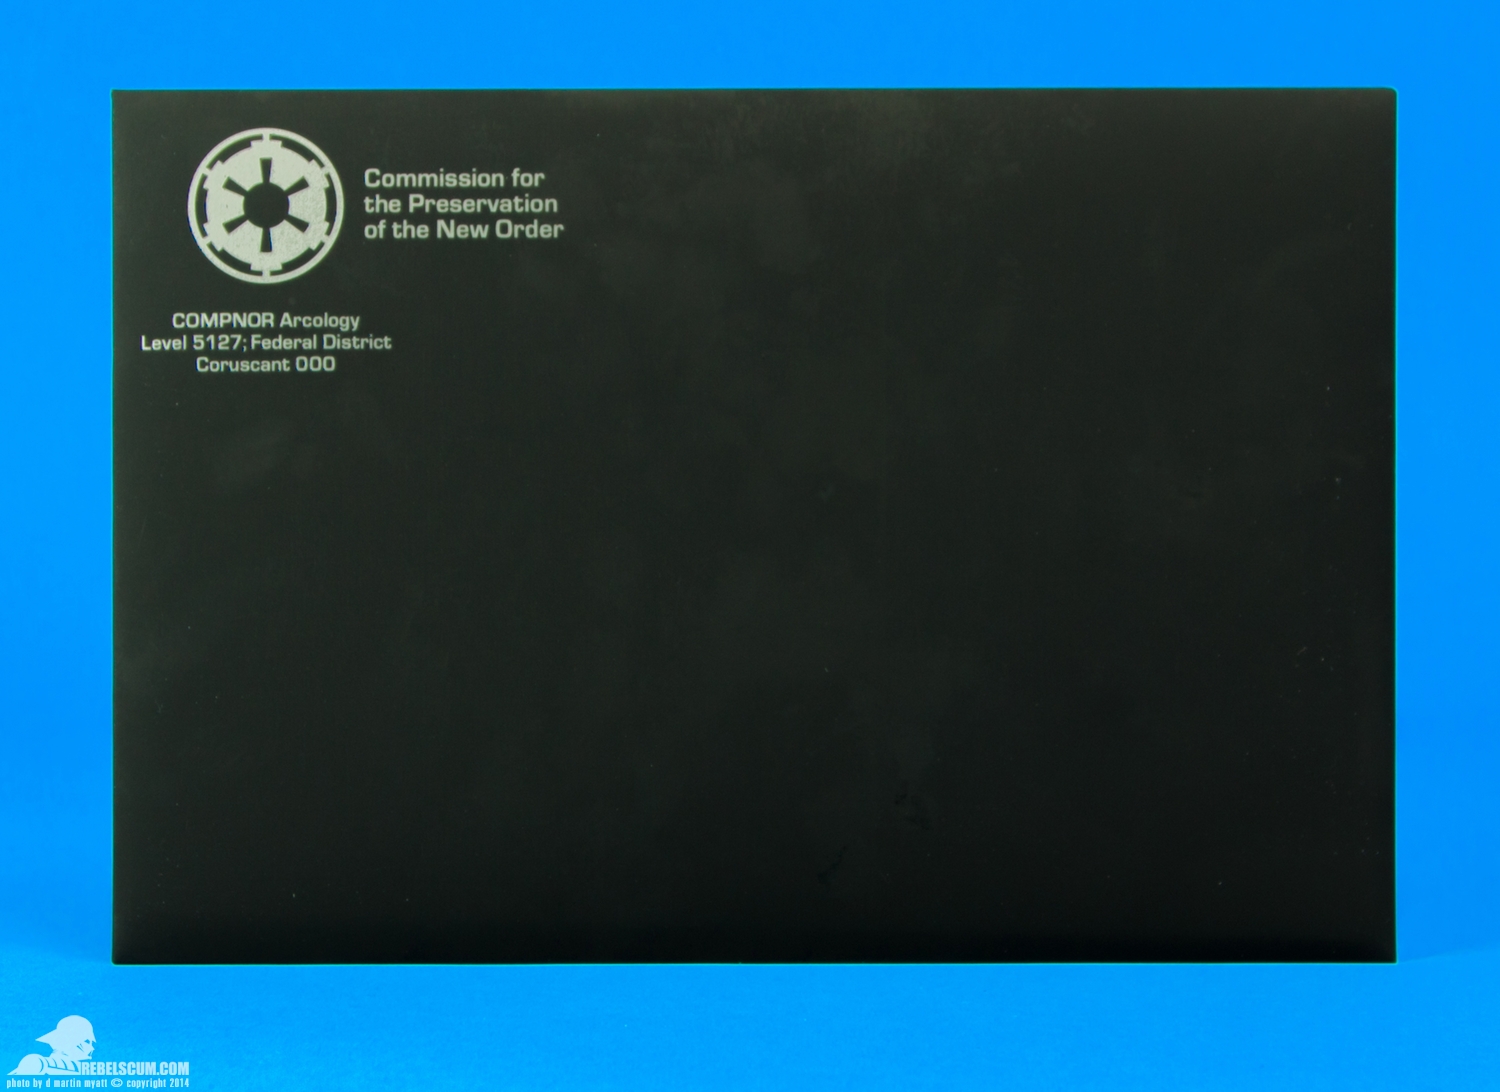 Star-Wars-Rebels-2014-SDCC-Screening-Promotional-Card-Set-001.jpg